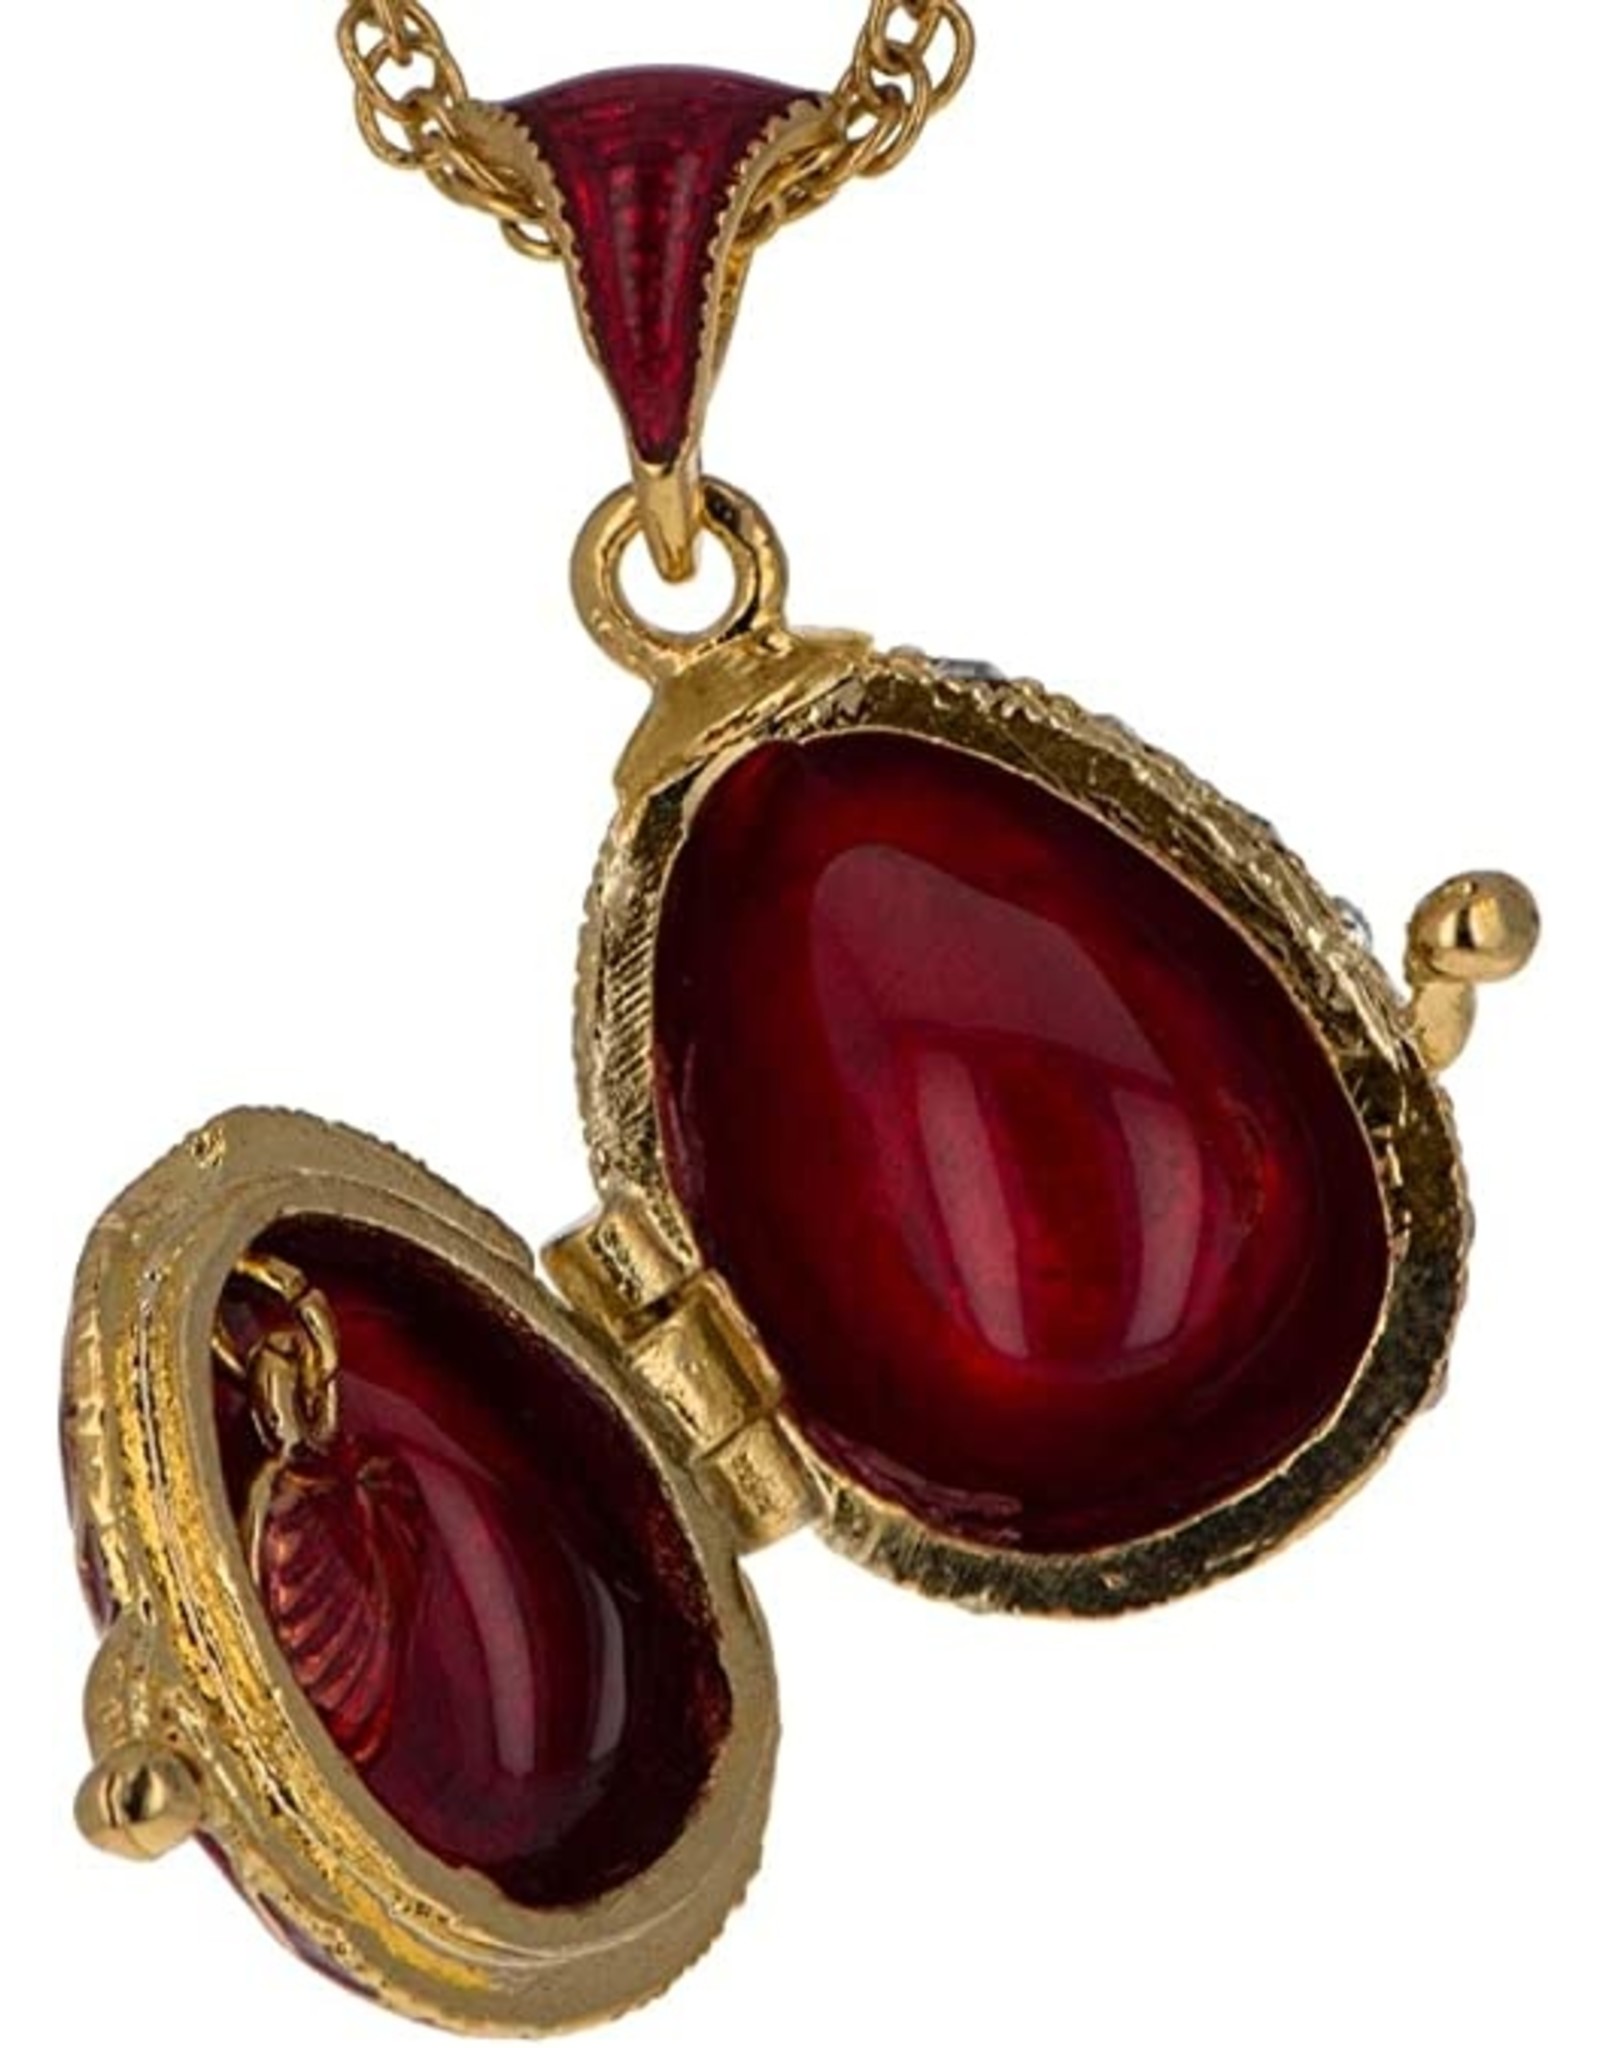 Fabergé Style Egg Necklace (Red Lattice)